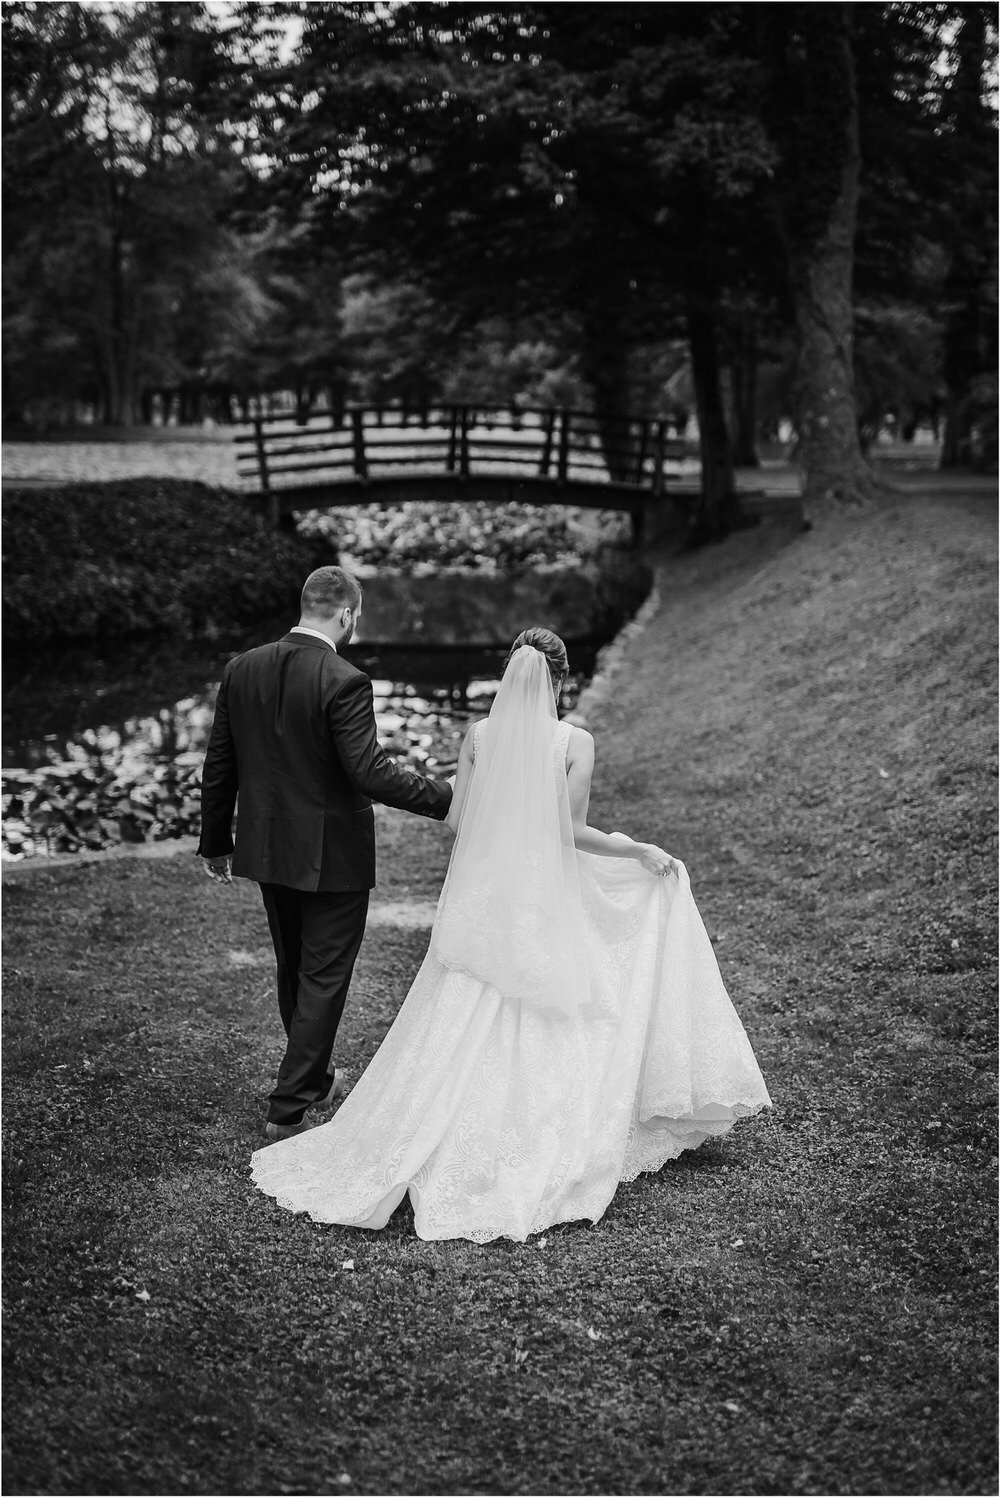 best of wedding photography 2019 photographer italy ireland tuscany santorini greece spain barcelona lake como chateux scotland destination wedding 0181.jpg